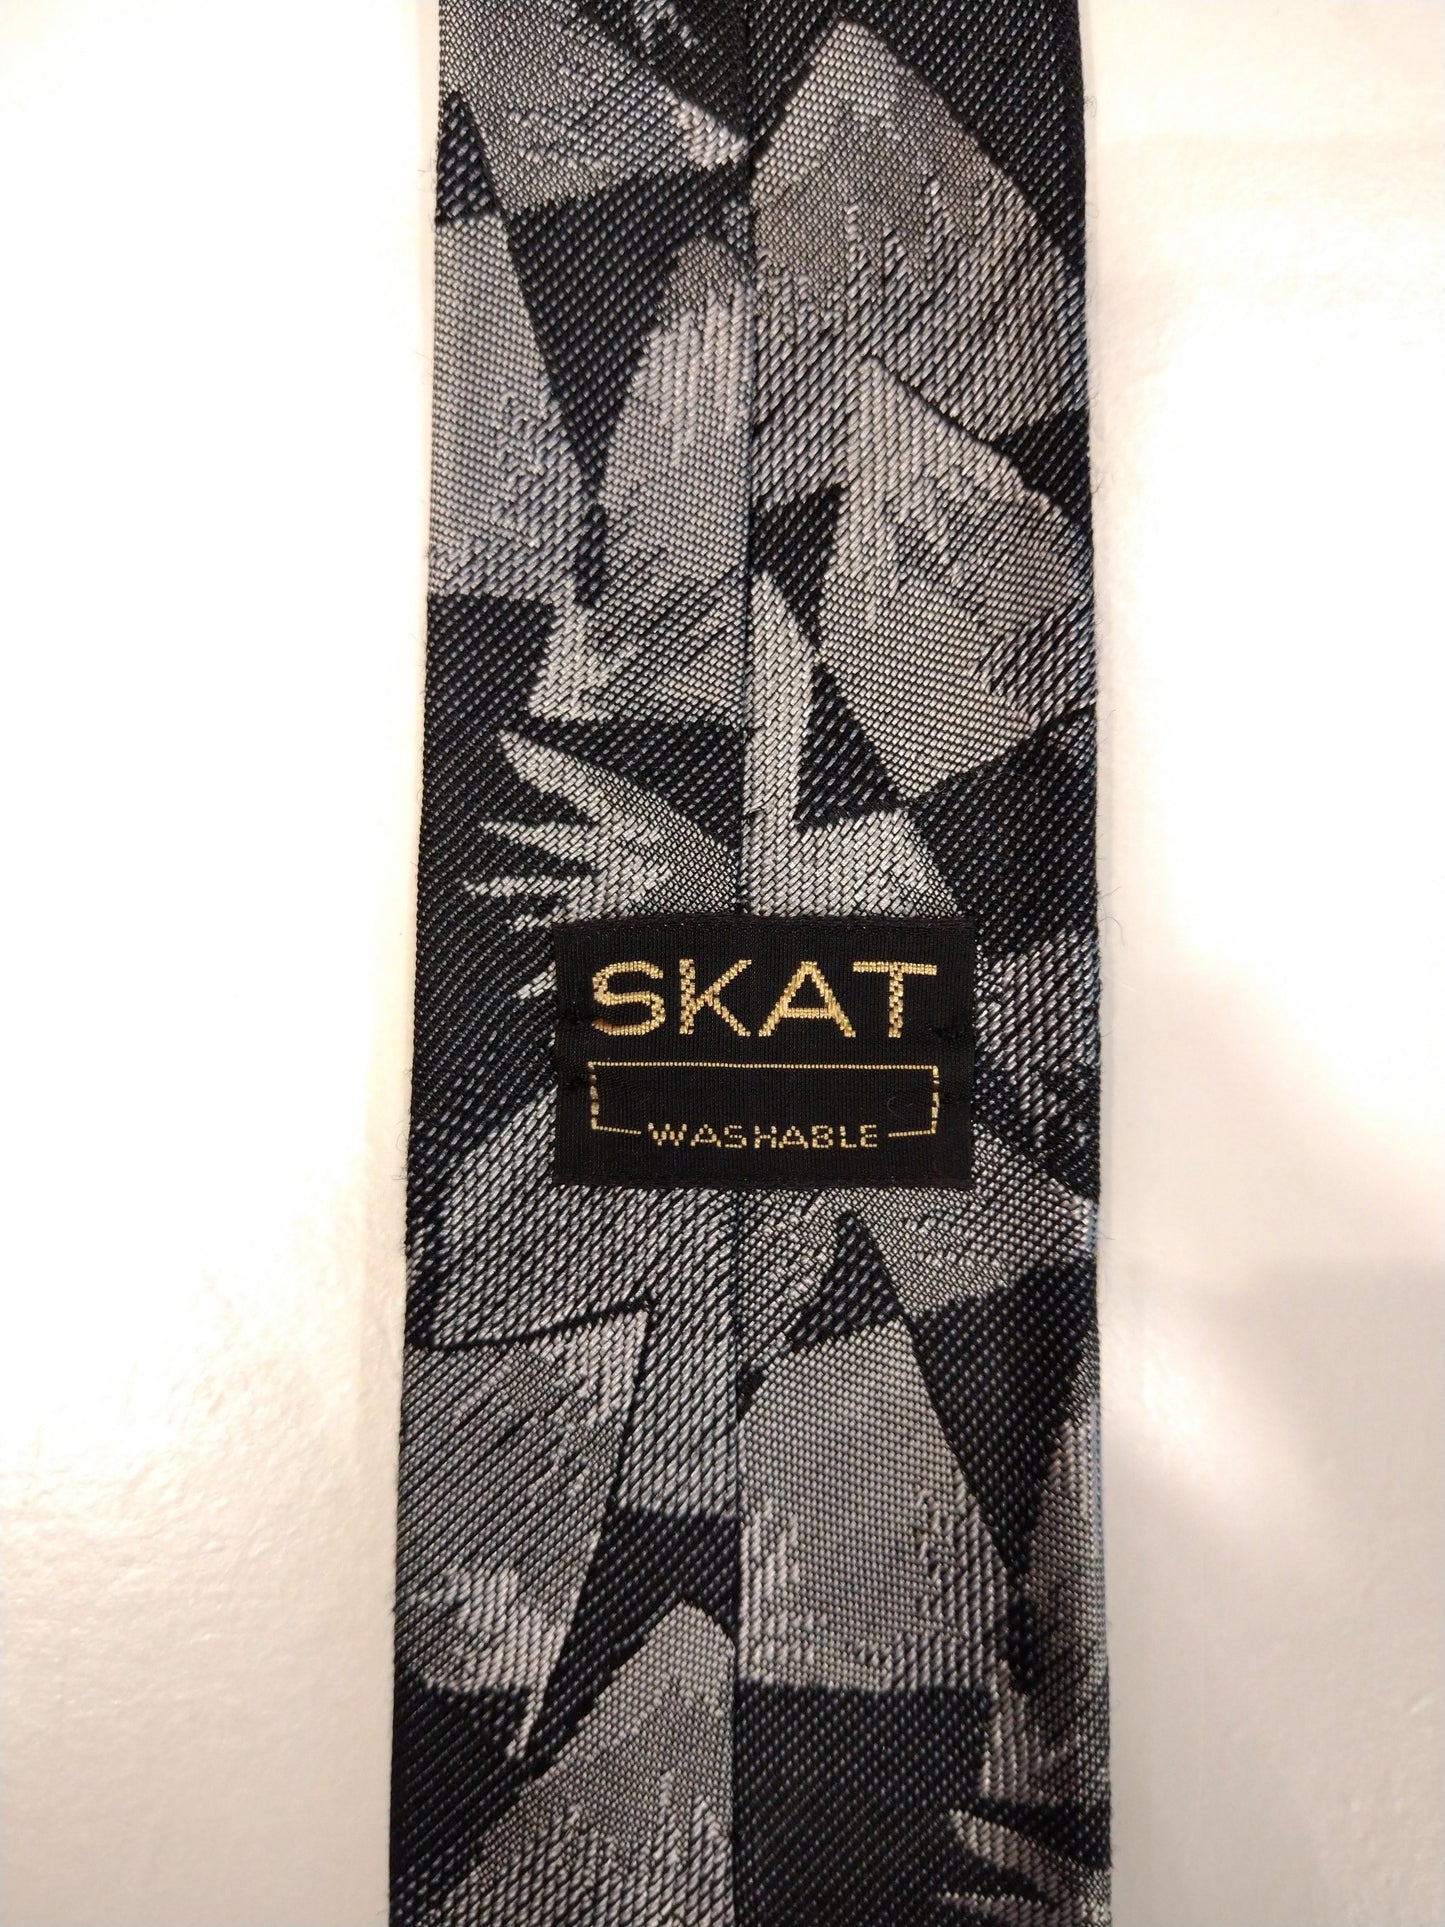 Cravatta extra stretta dello skat vintage. Moto grigio nero.